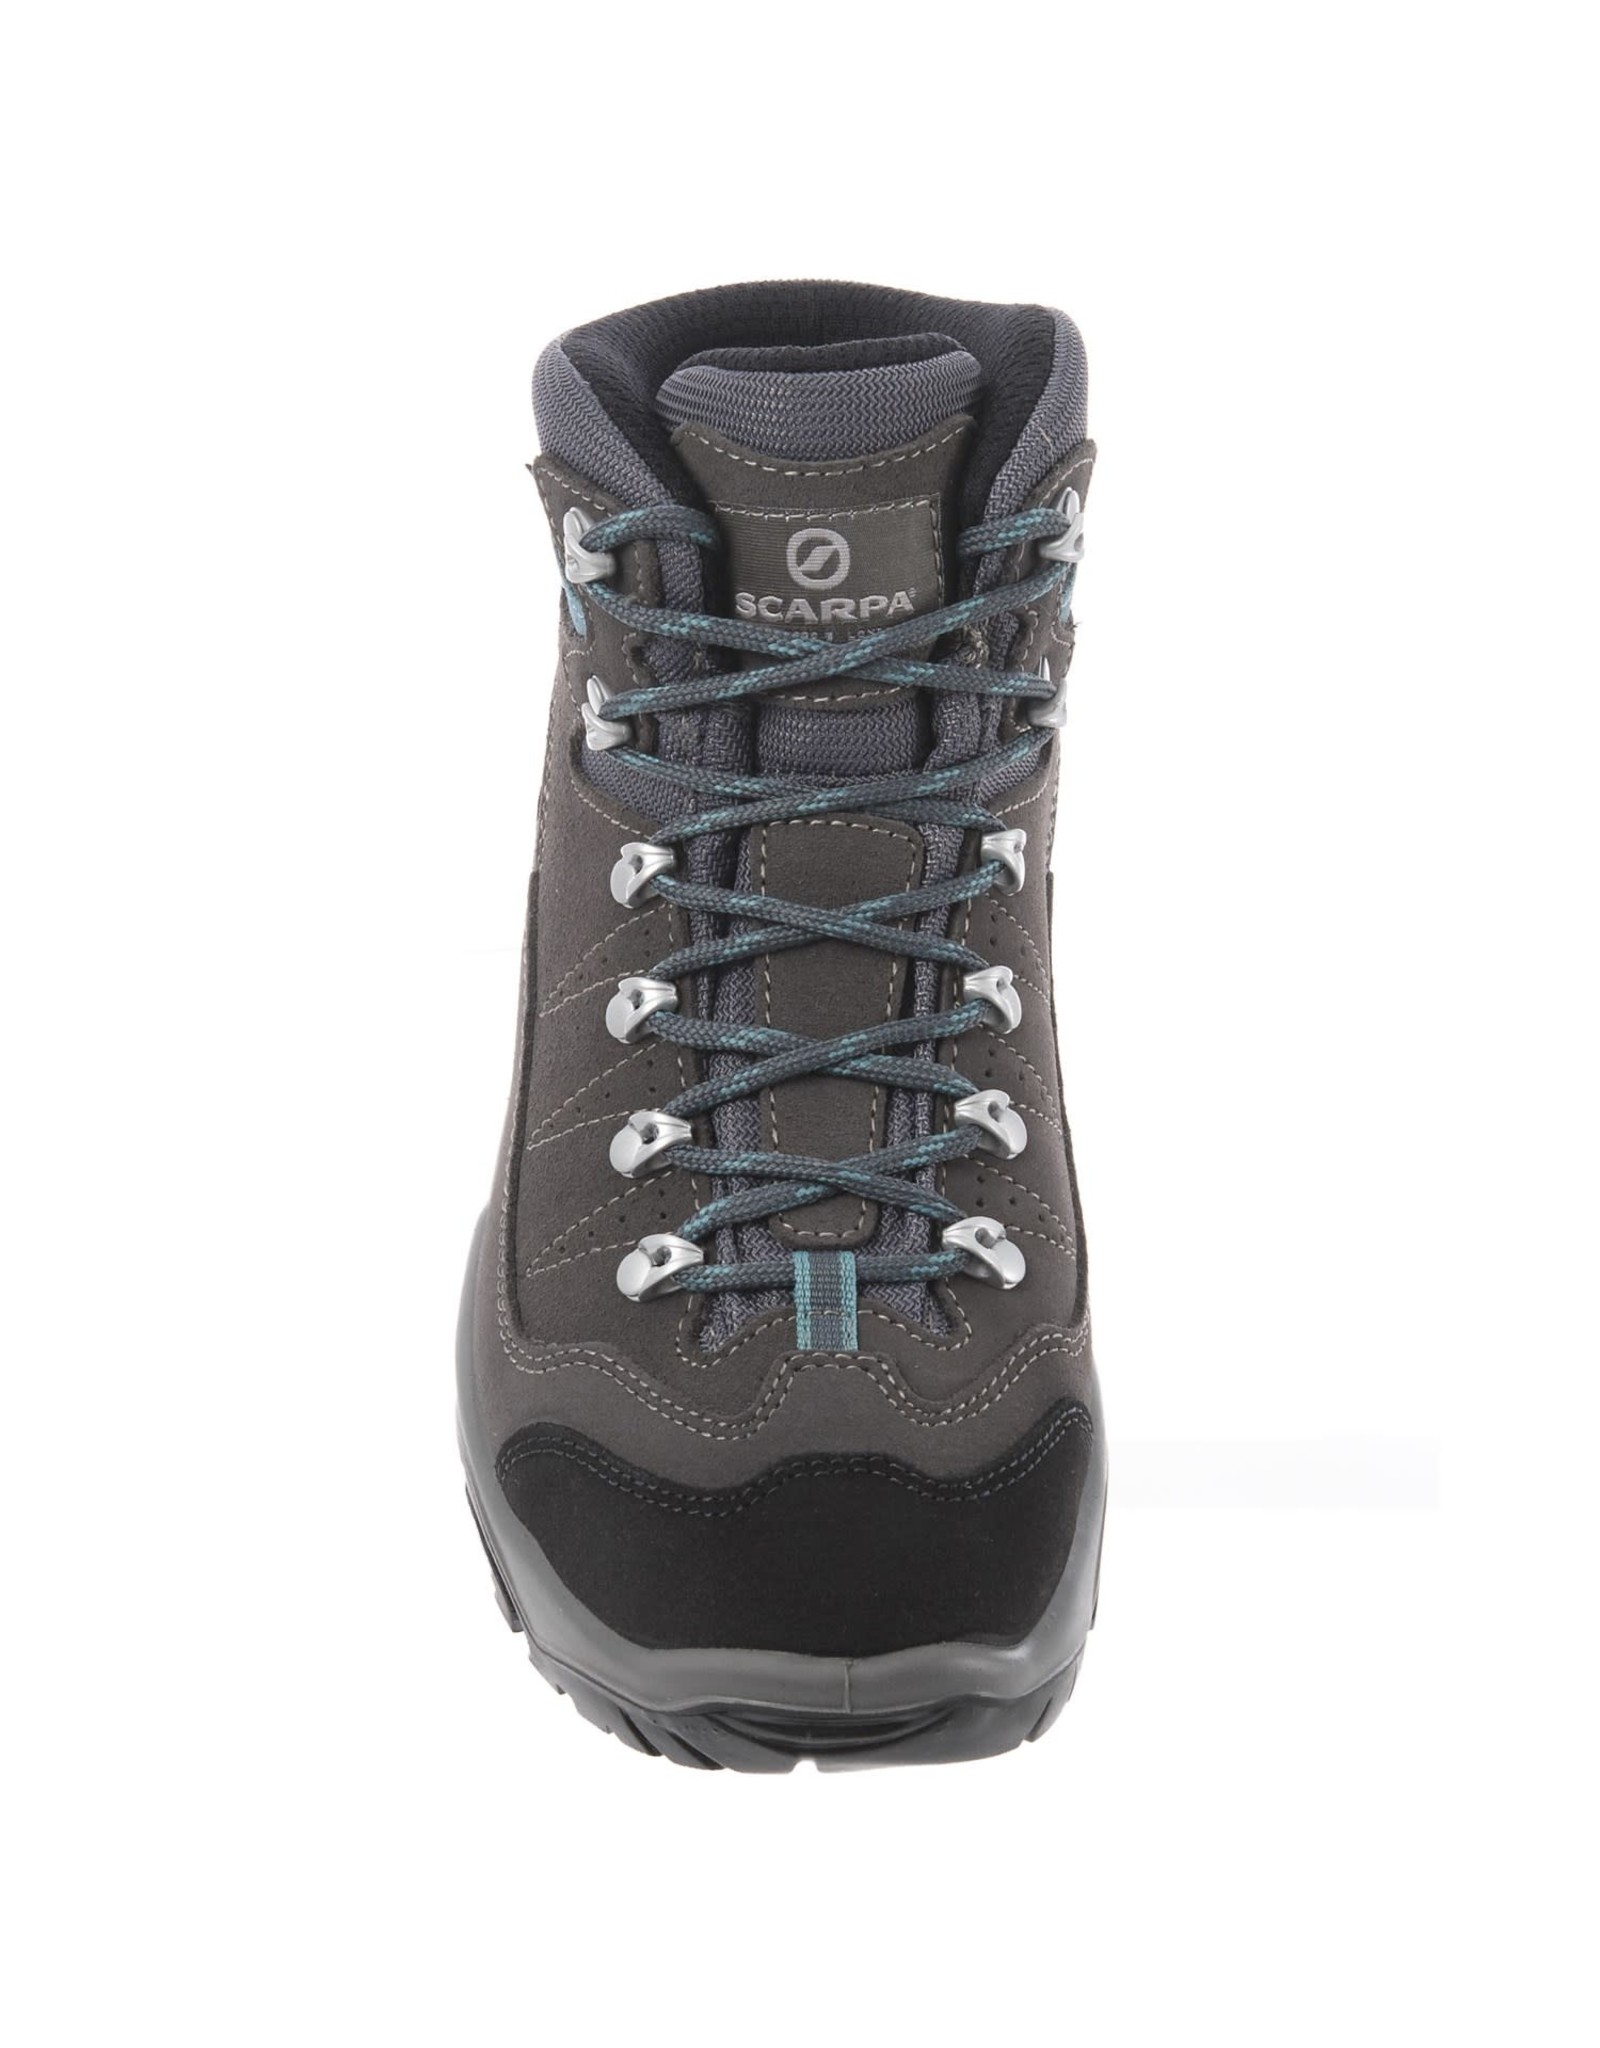 Scarpa Mistral GTX Hiking Boots - Women 